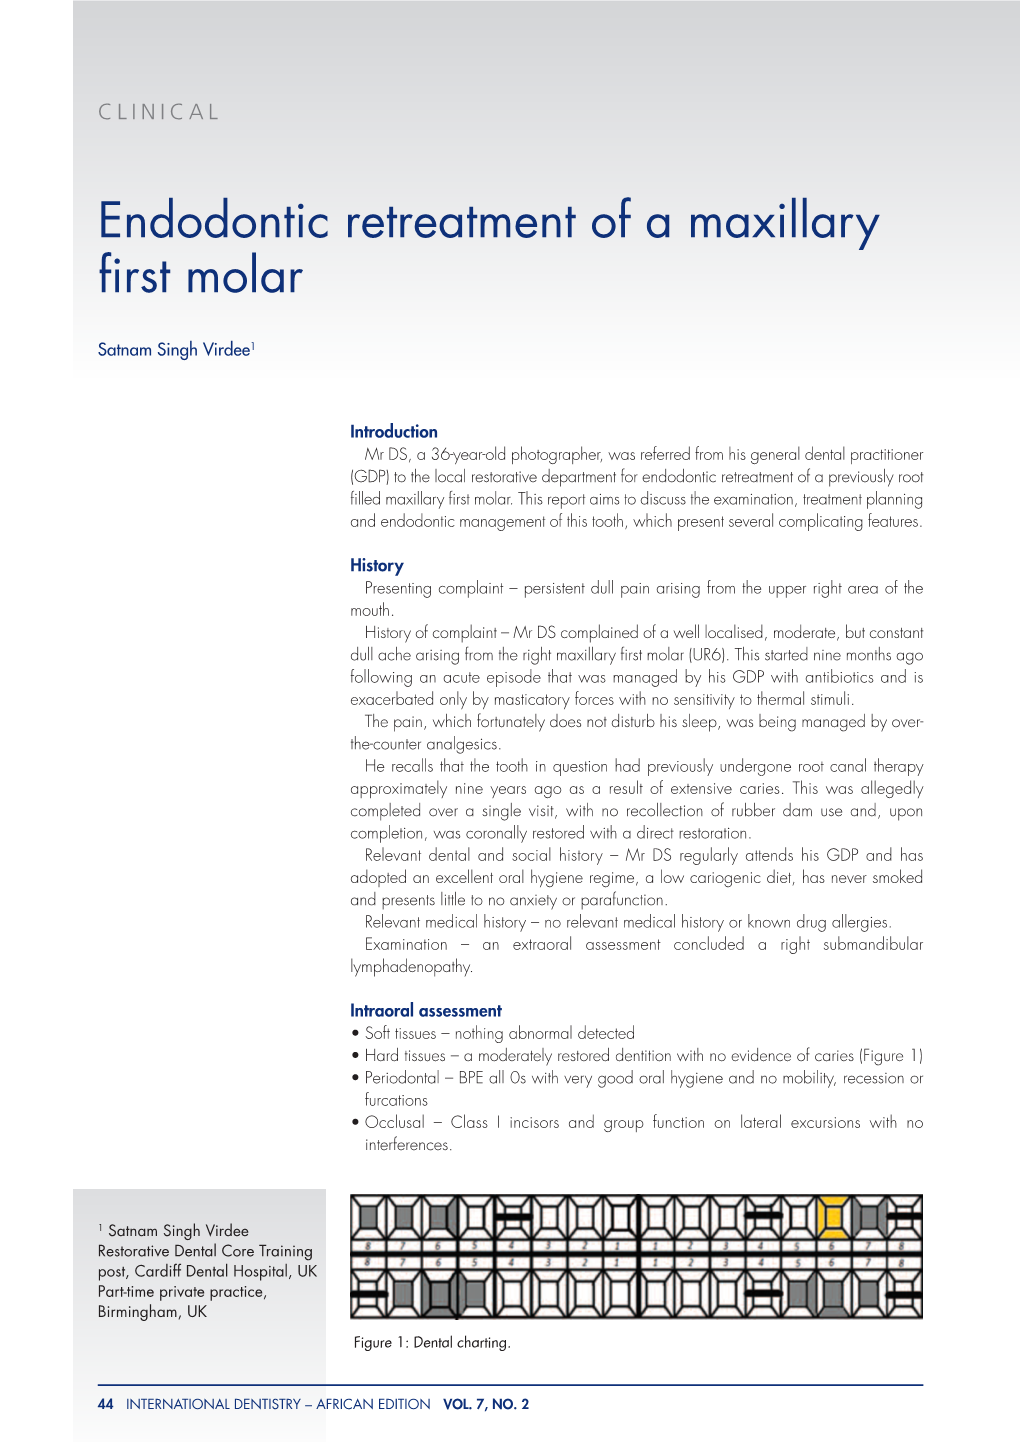 Endodontic Retreatment of a Maxillary First Molar